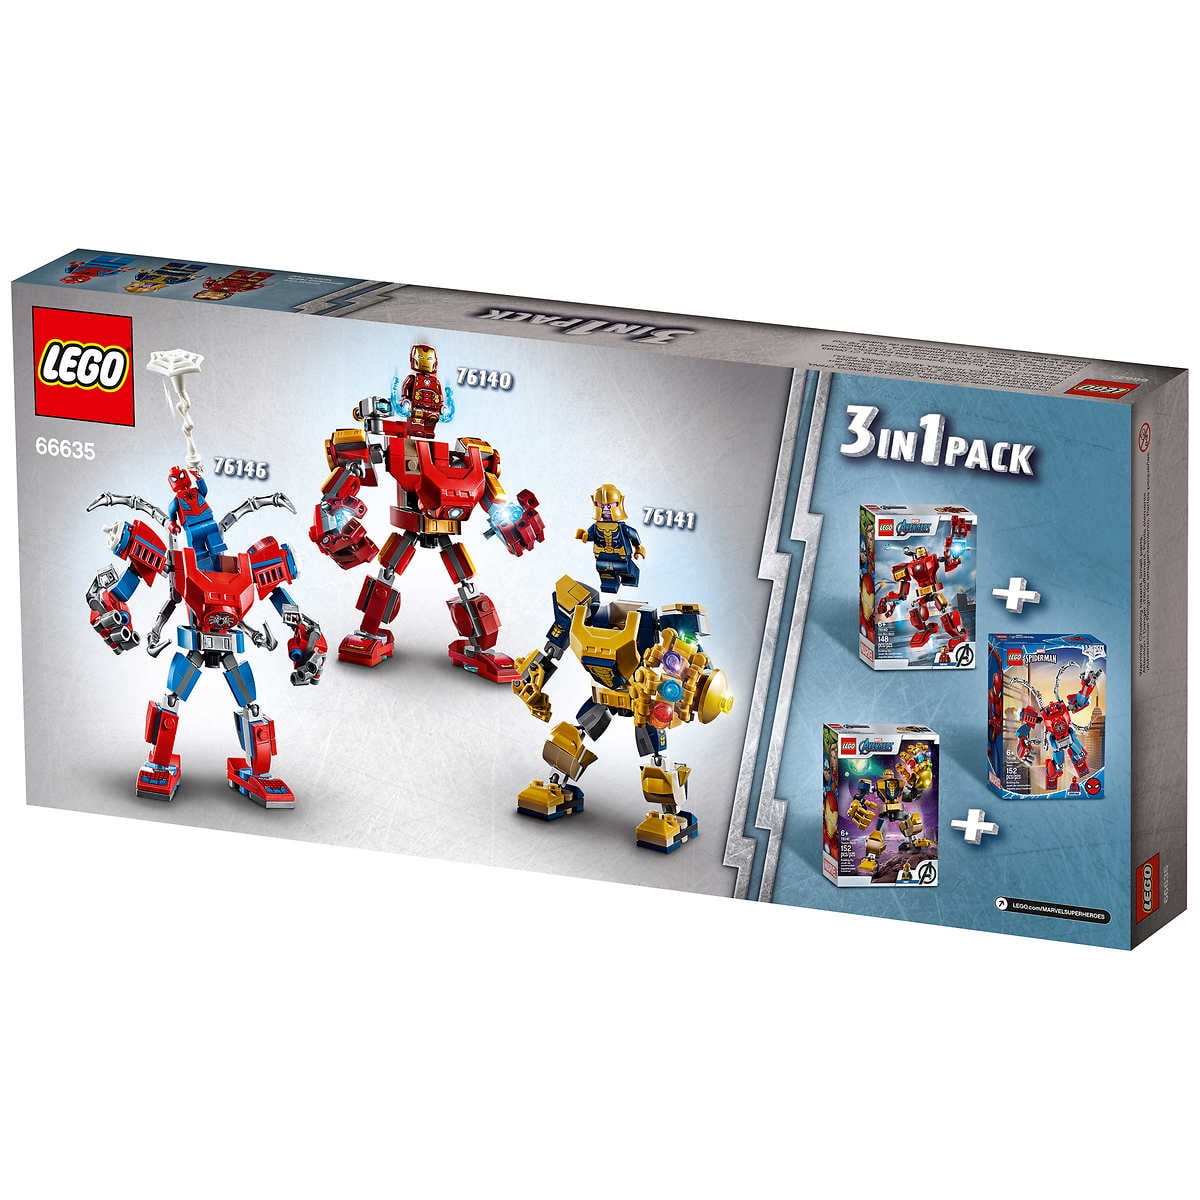 Building Kit Lego Iron Man Hulkbuster vs. Thanos, Posters, gifts,  merchandise